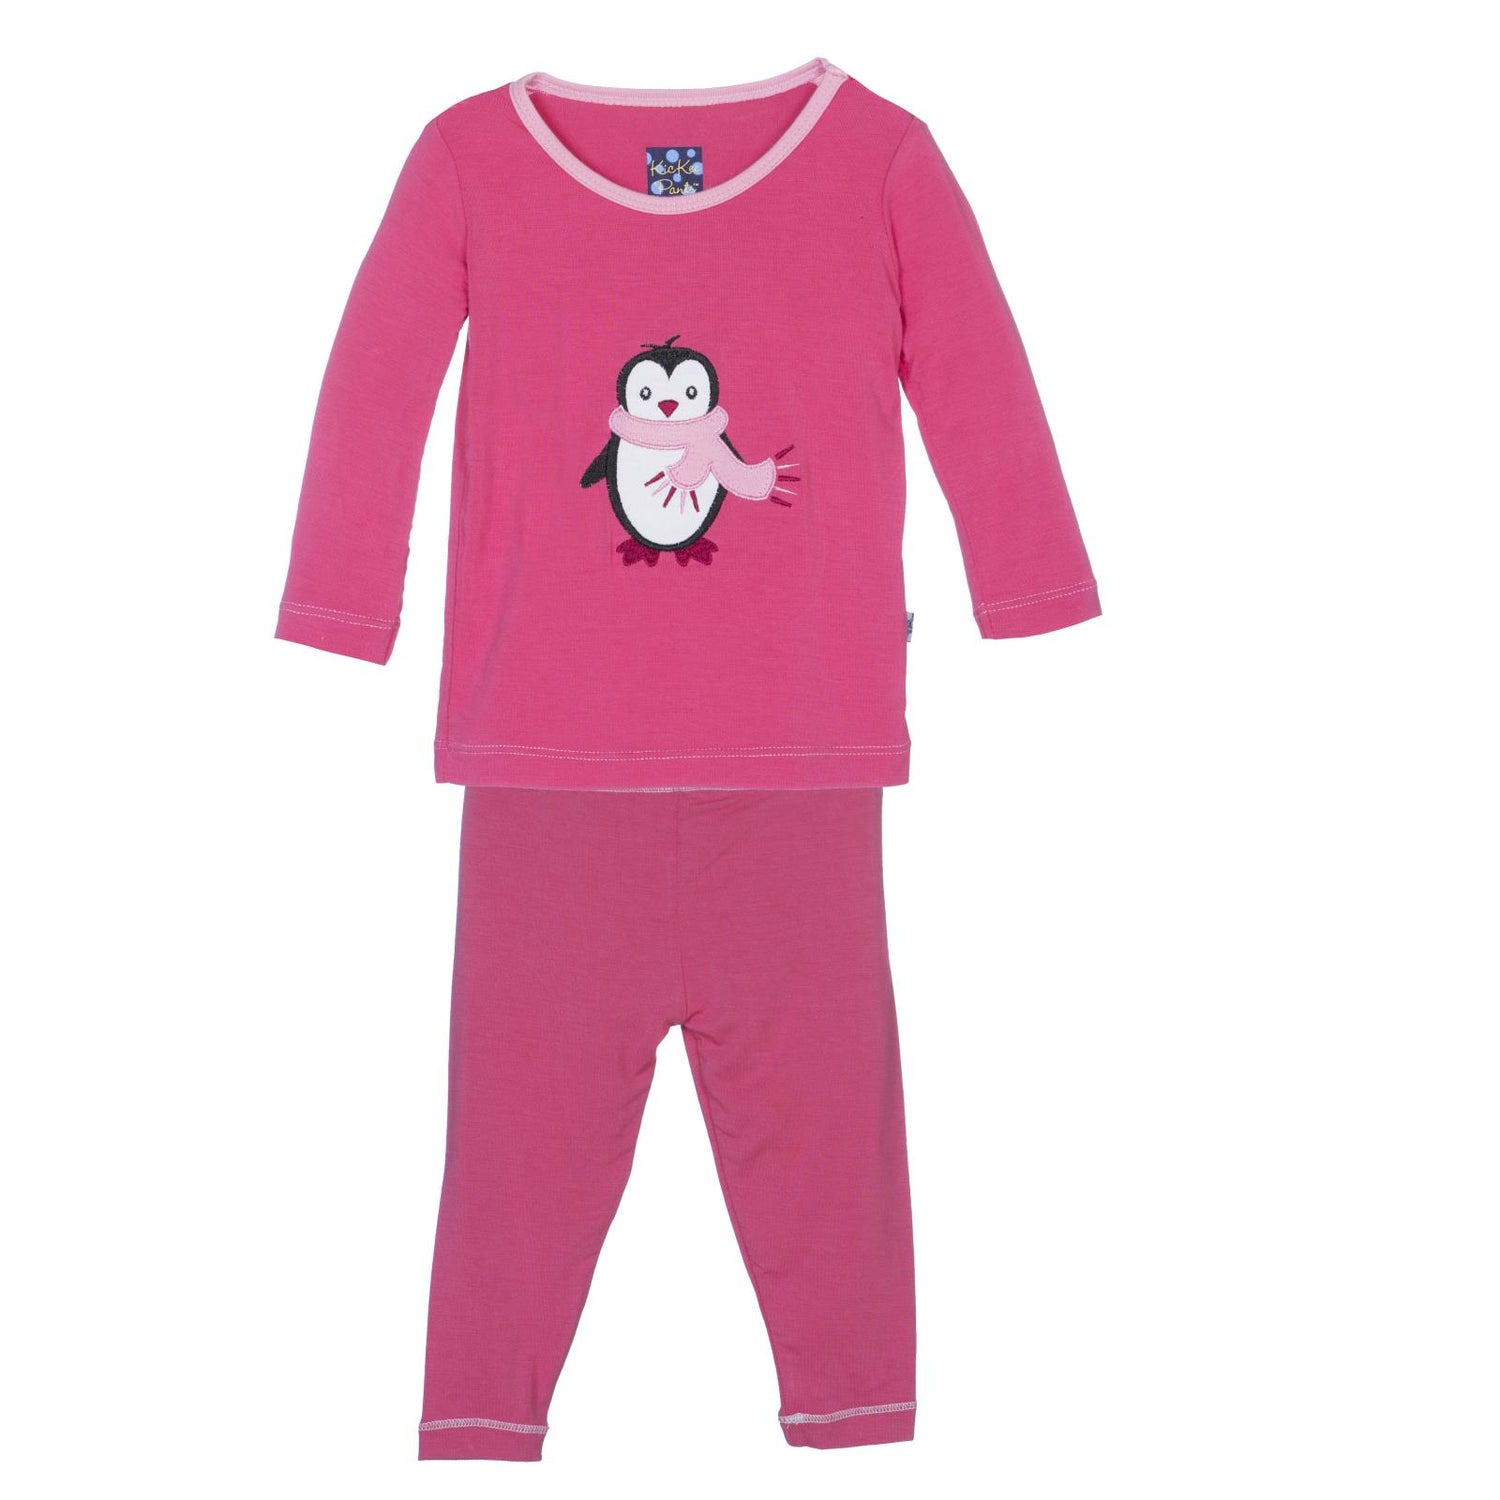 Long Sleeve Applique Pajama Set in Winter Rose Penguin